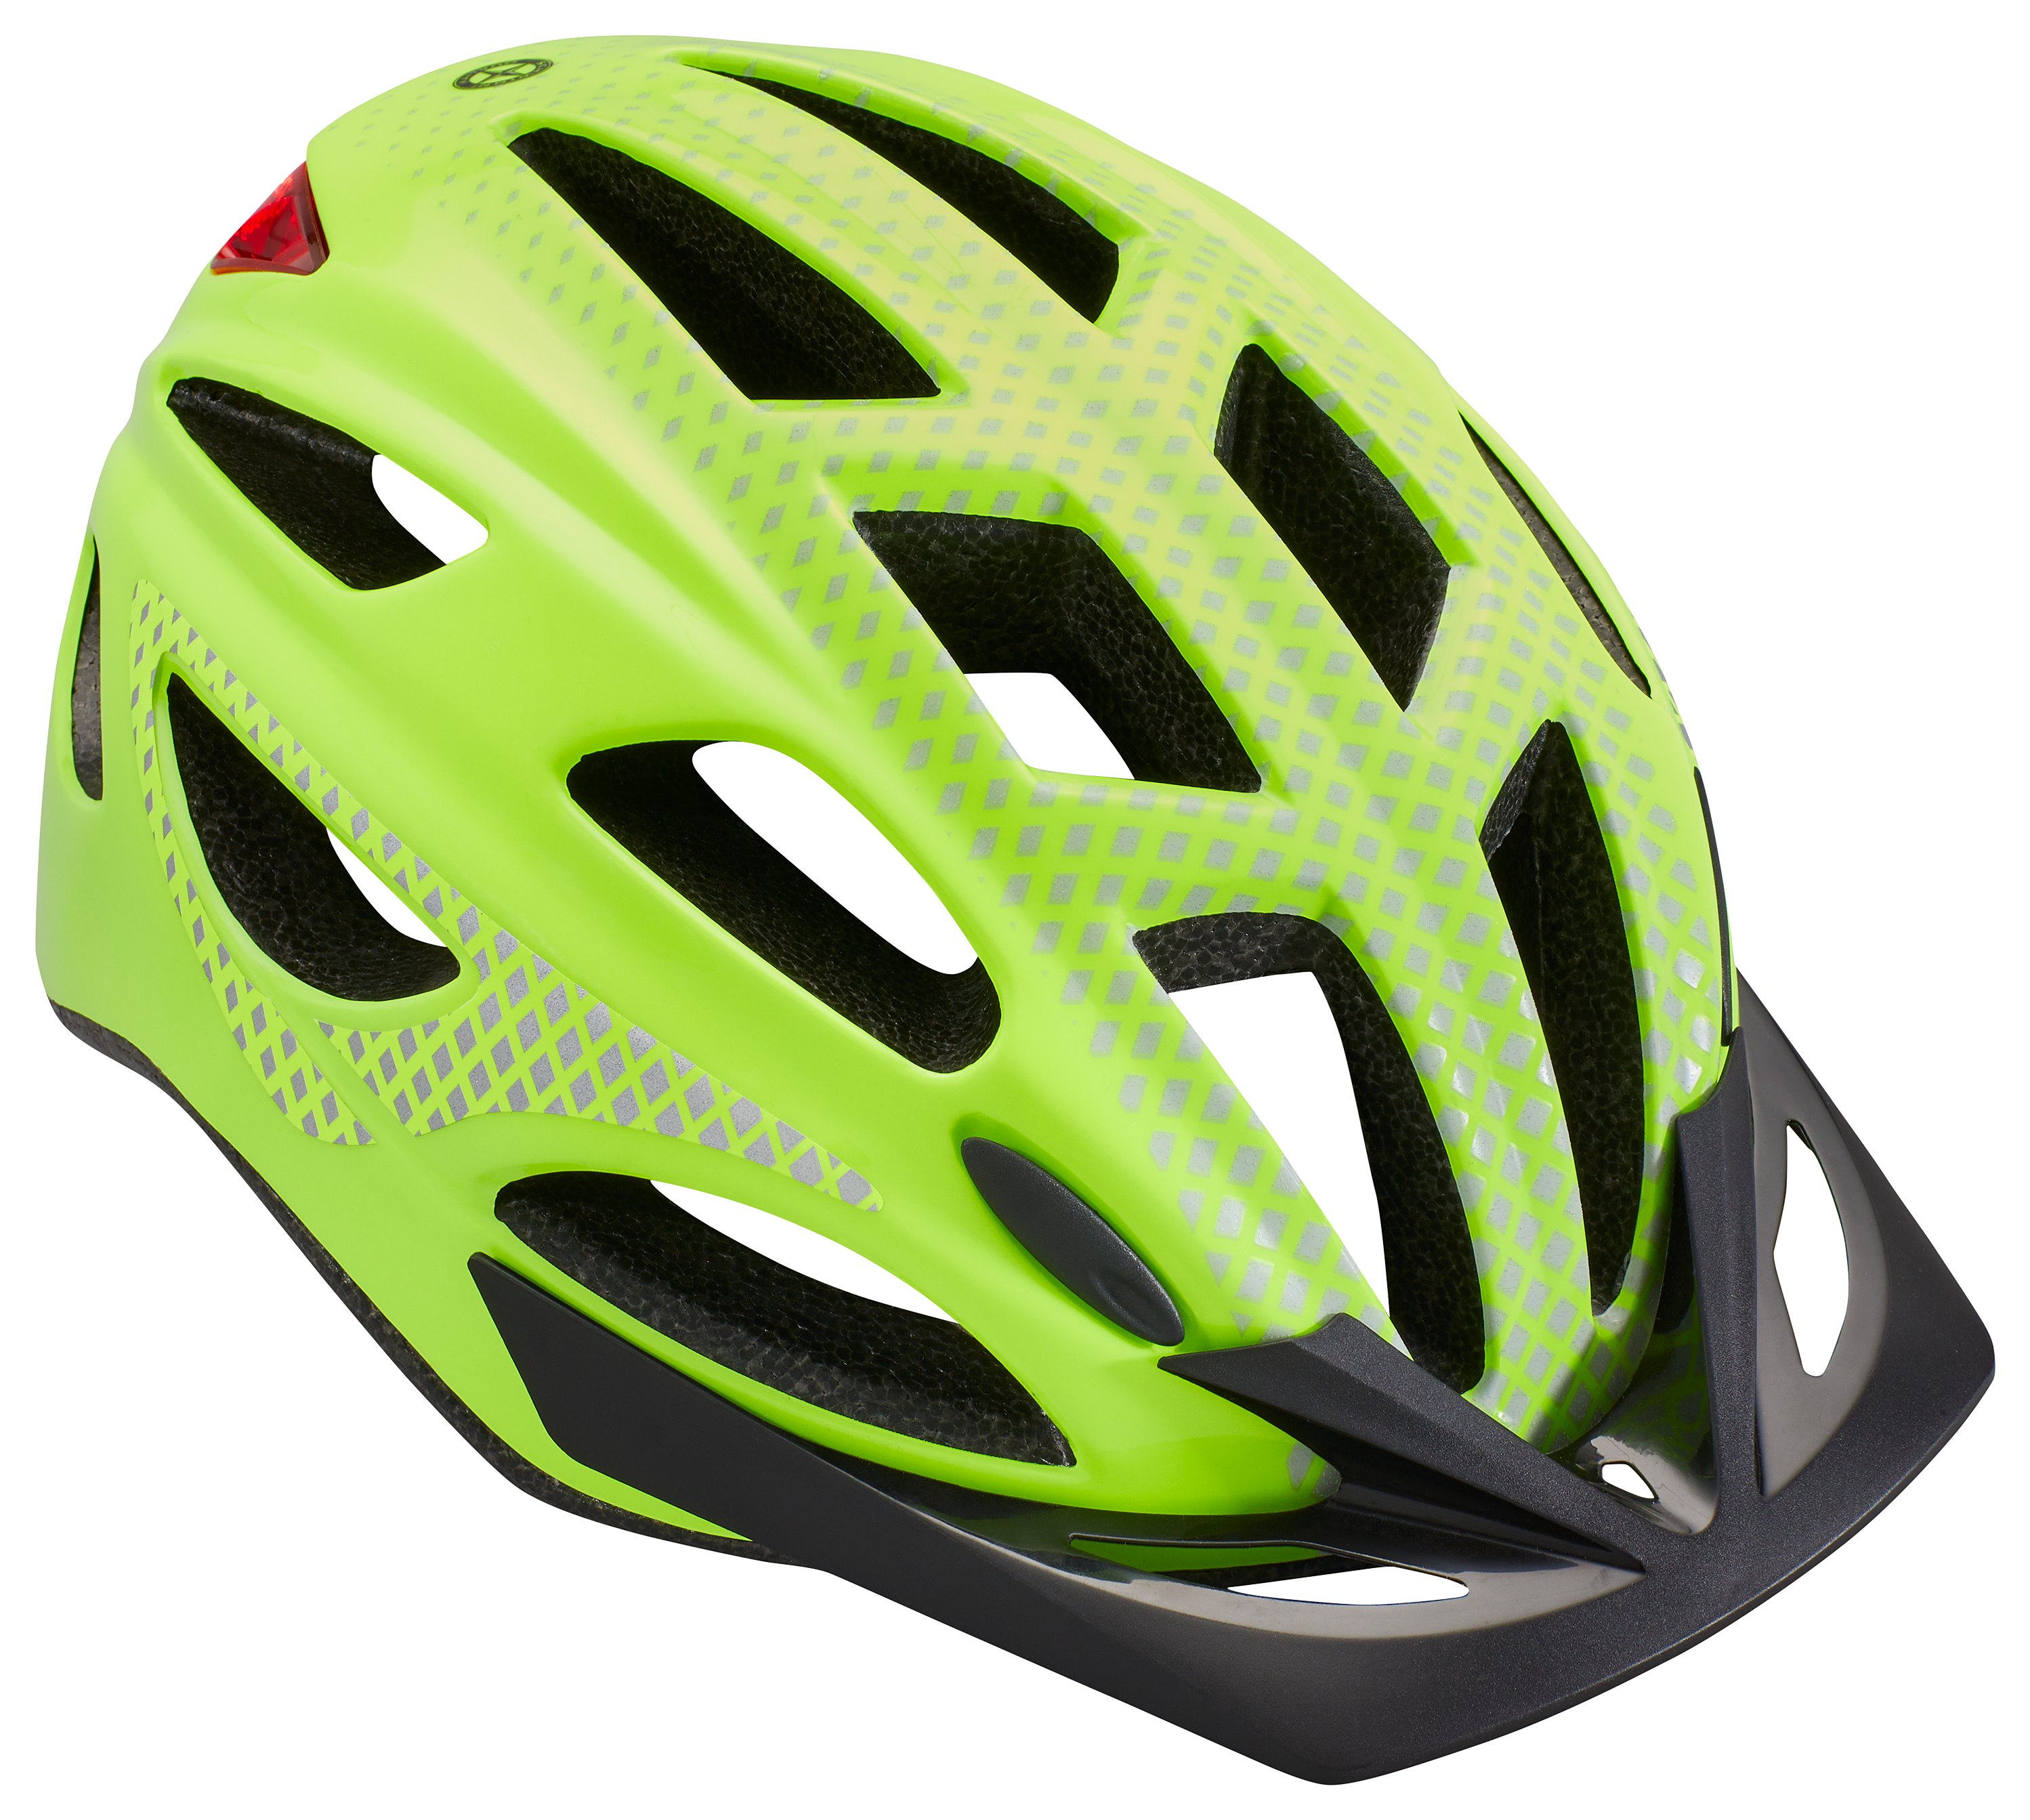 Schwinn Beam Bike Helmet - Neon Yellow